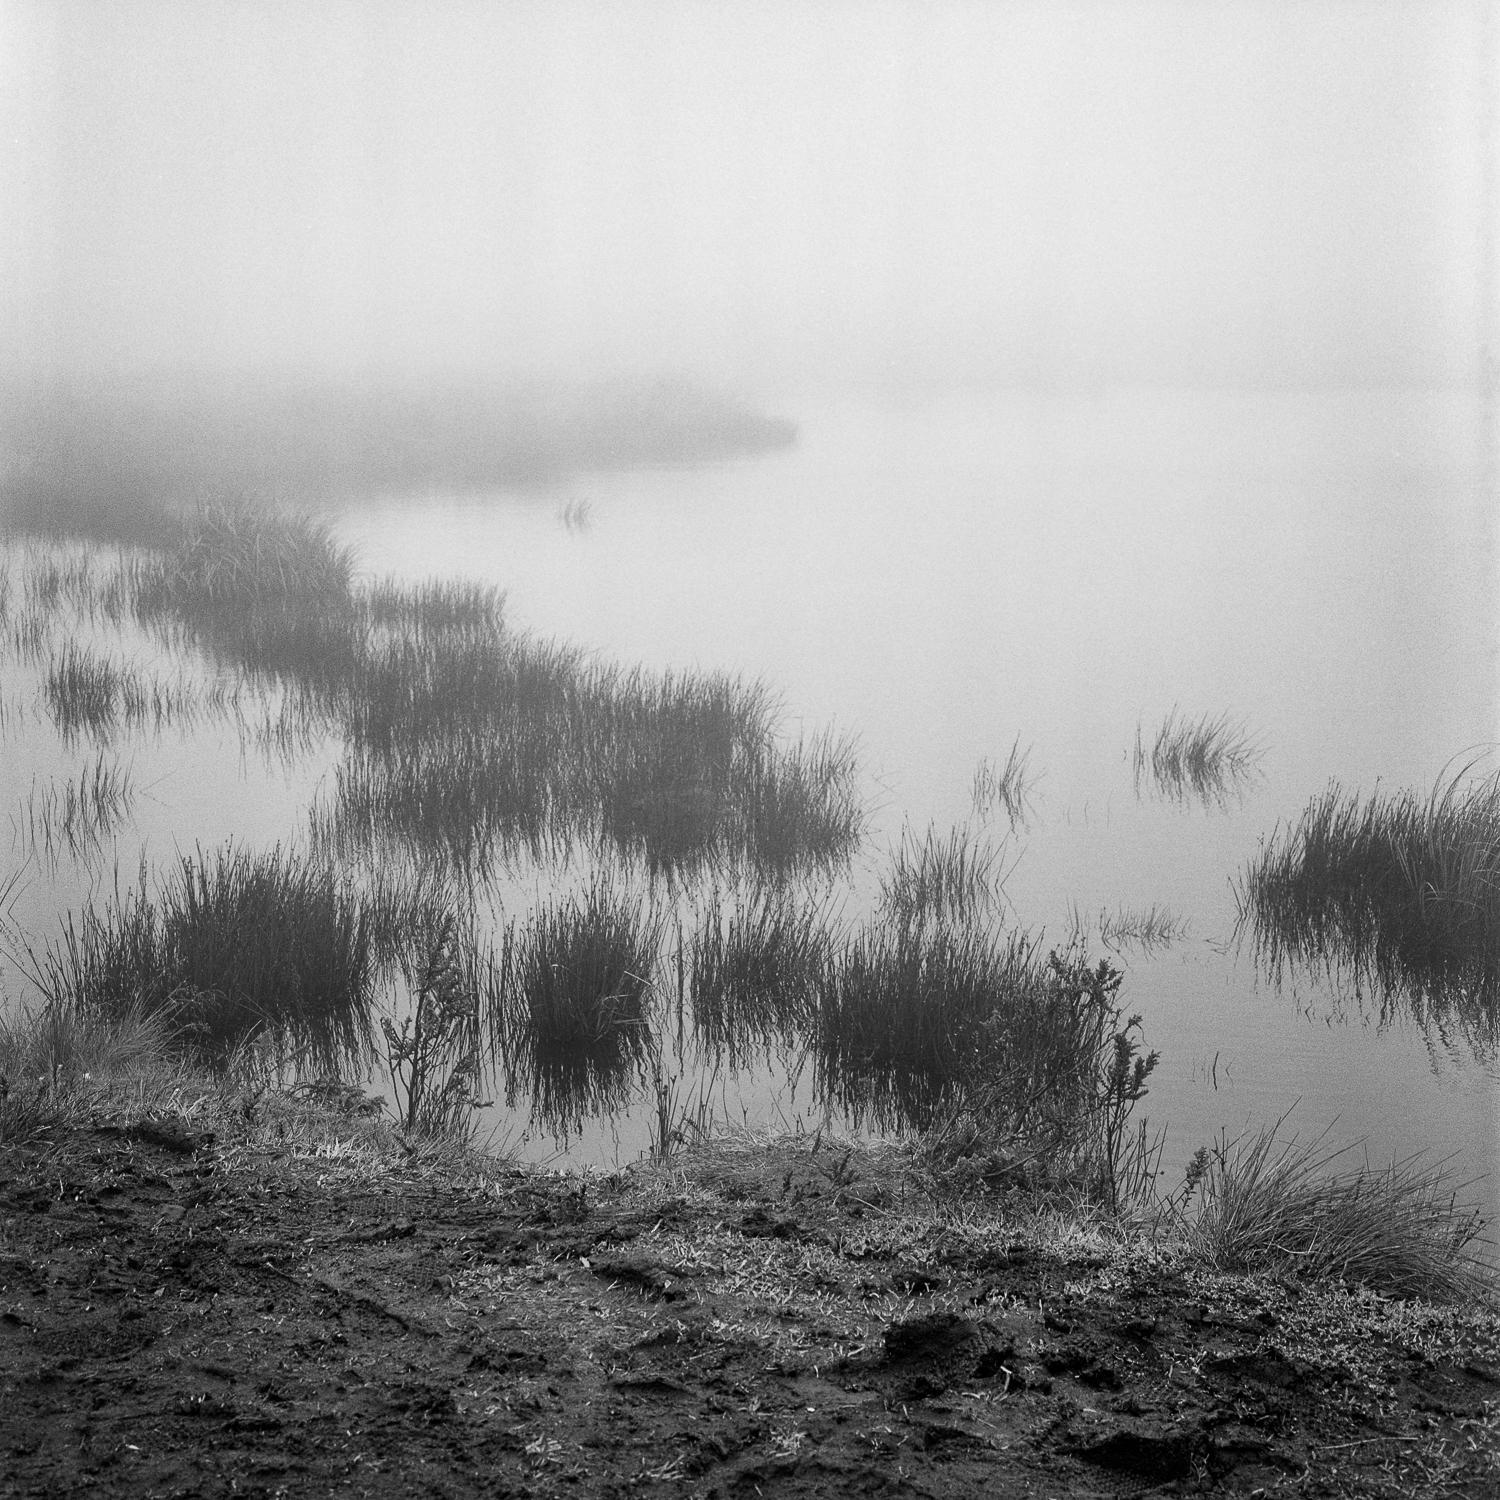 Landscape Photograph Miguel Winograd  - Laguna el Verjn, Impressions pigmentaires